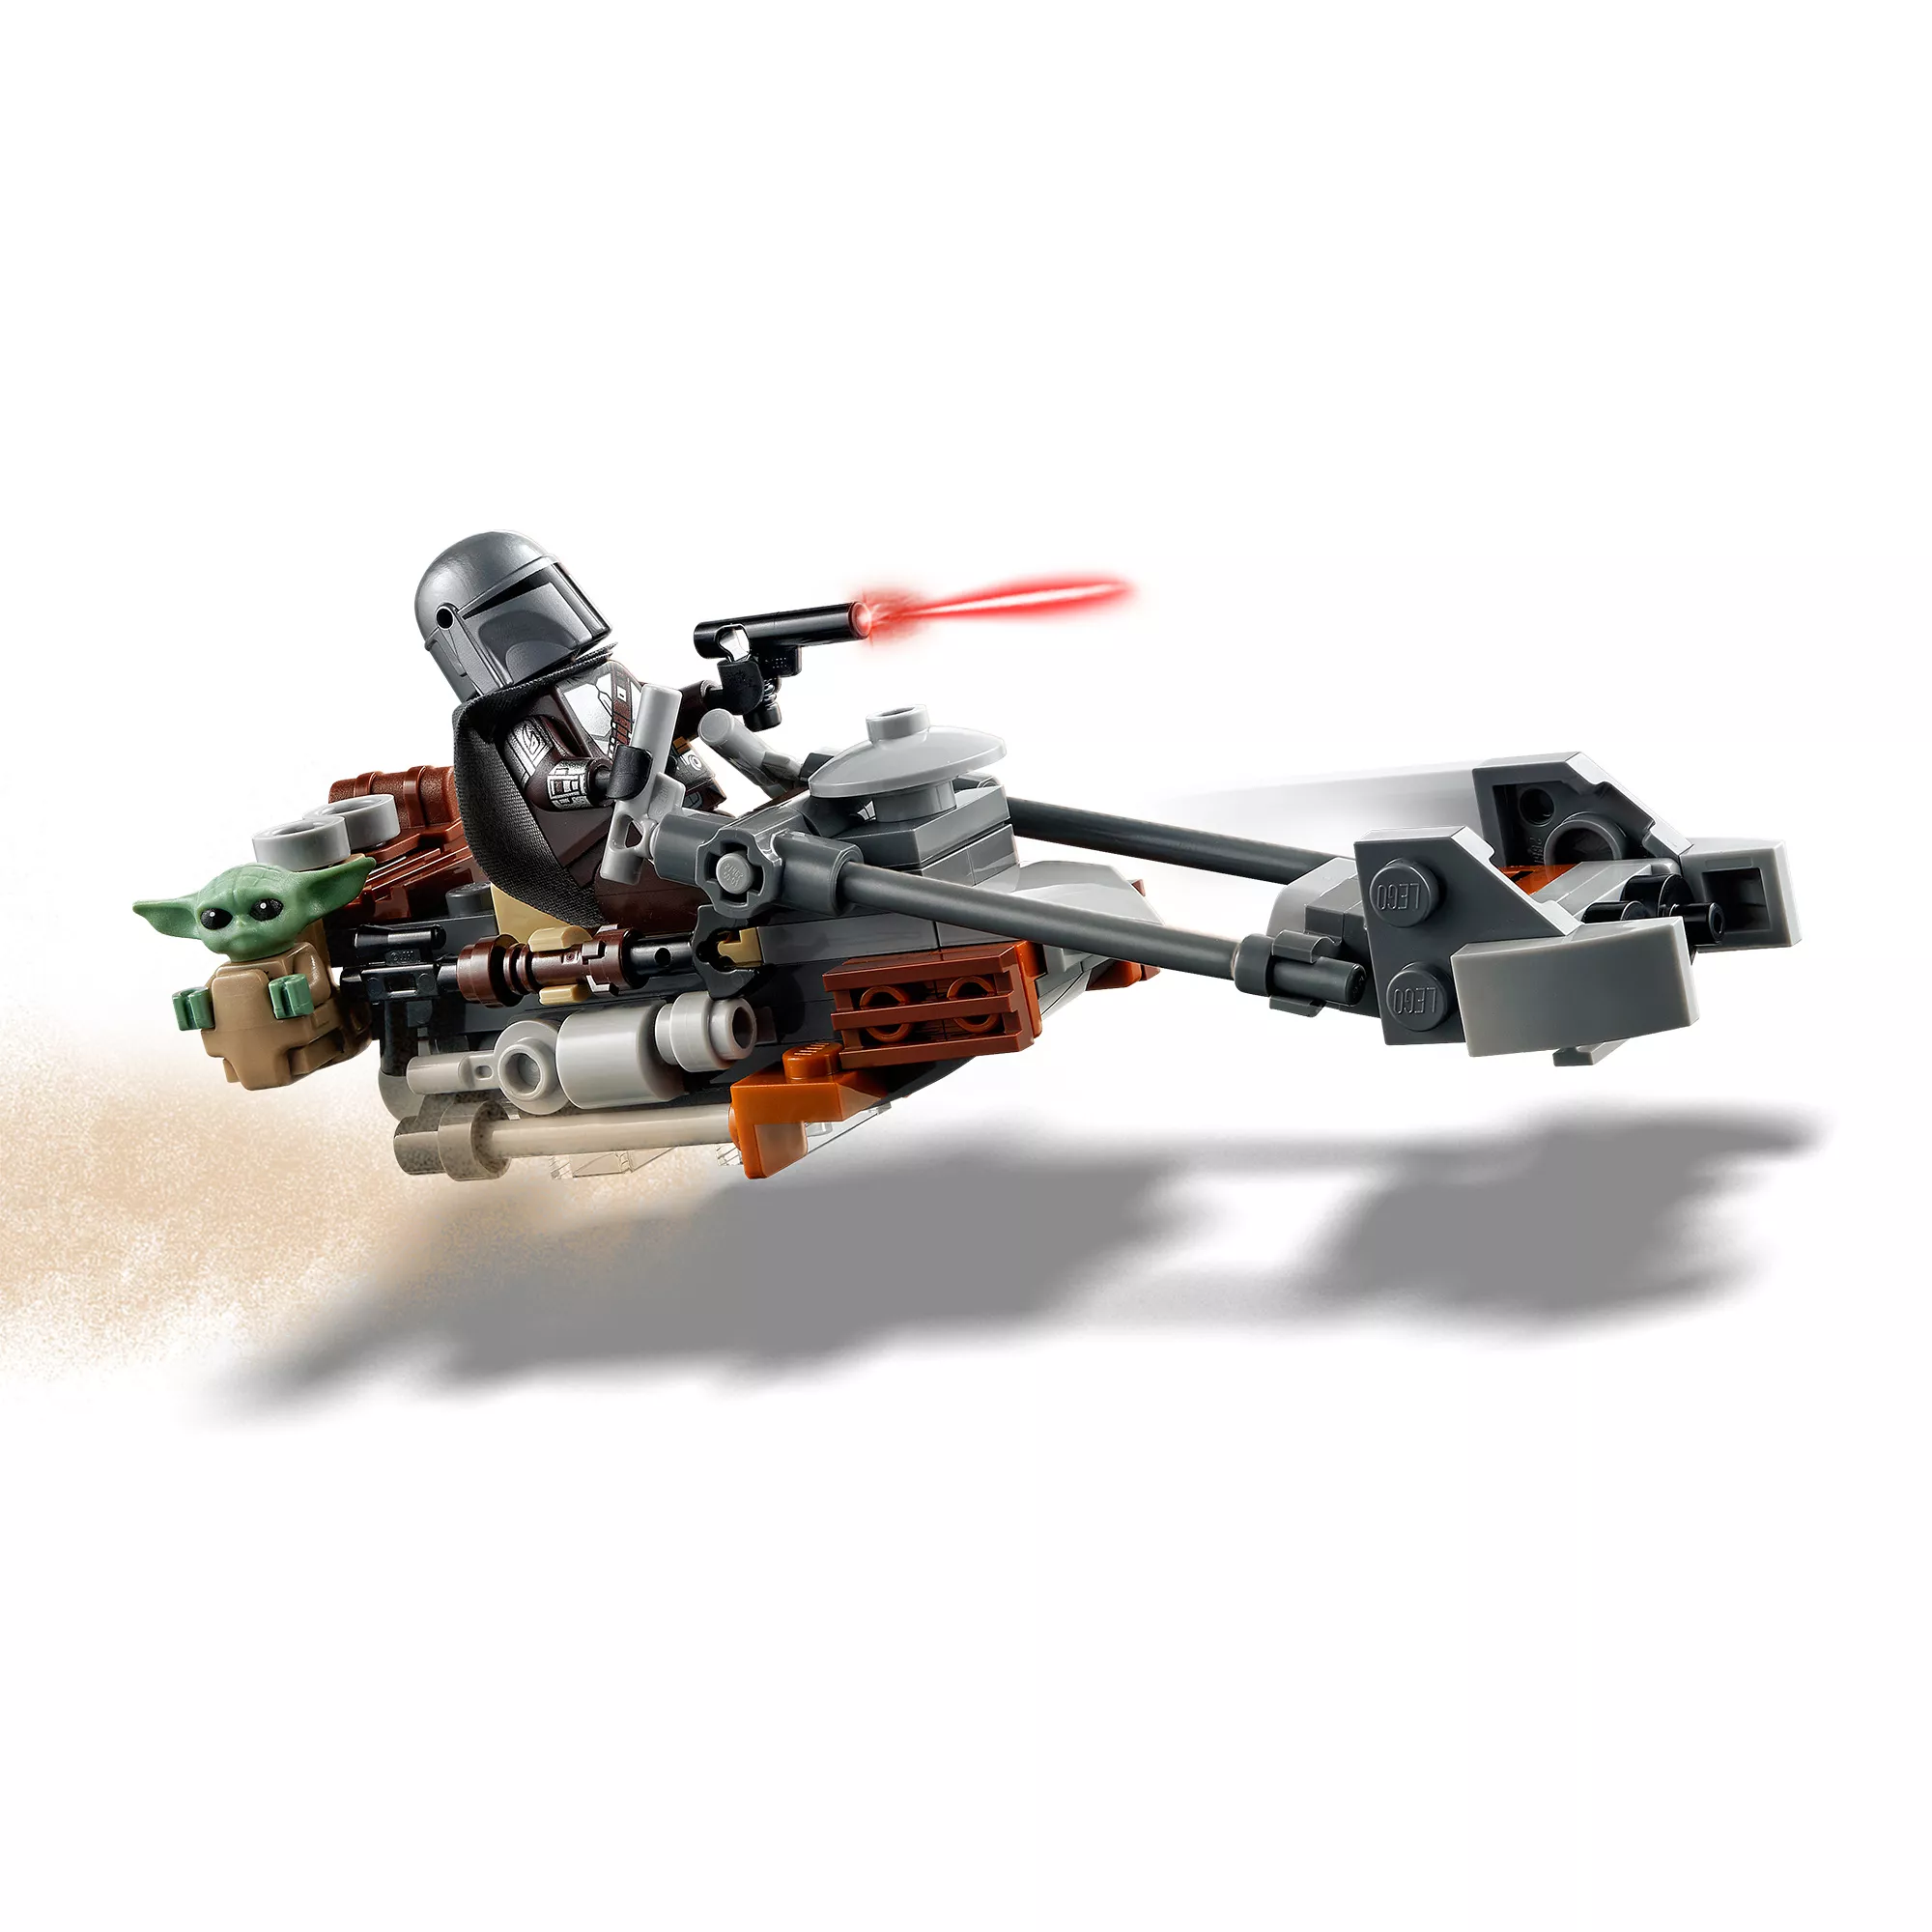 LEGO Star Wars Ärger auf Tatooine